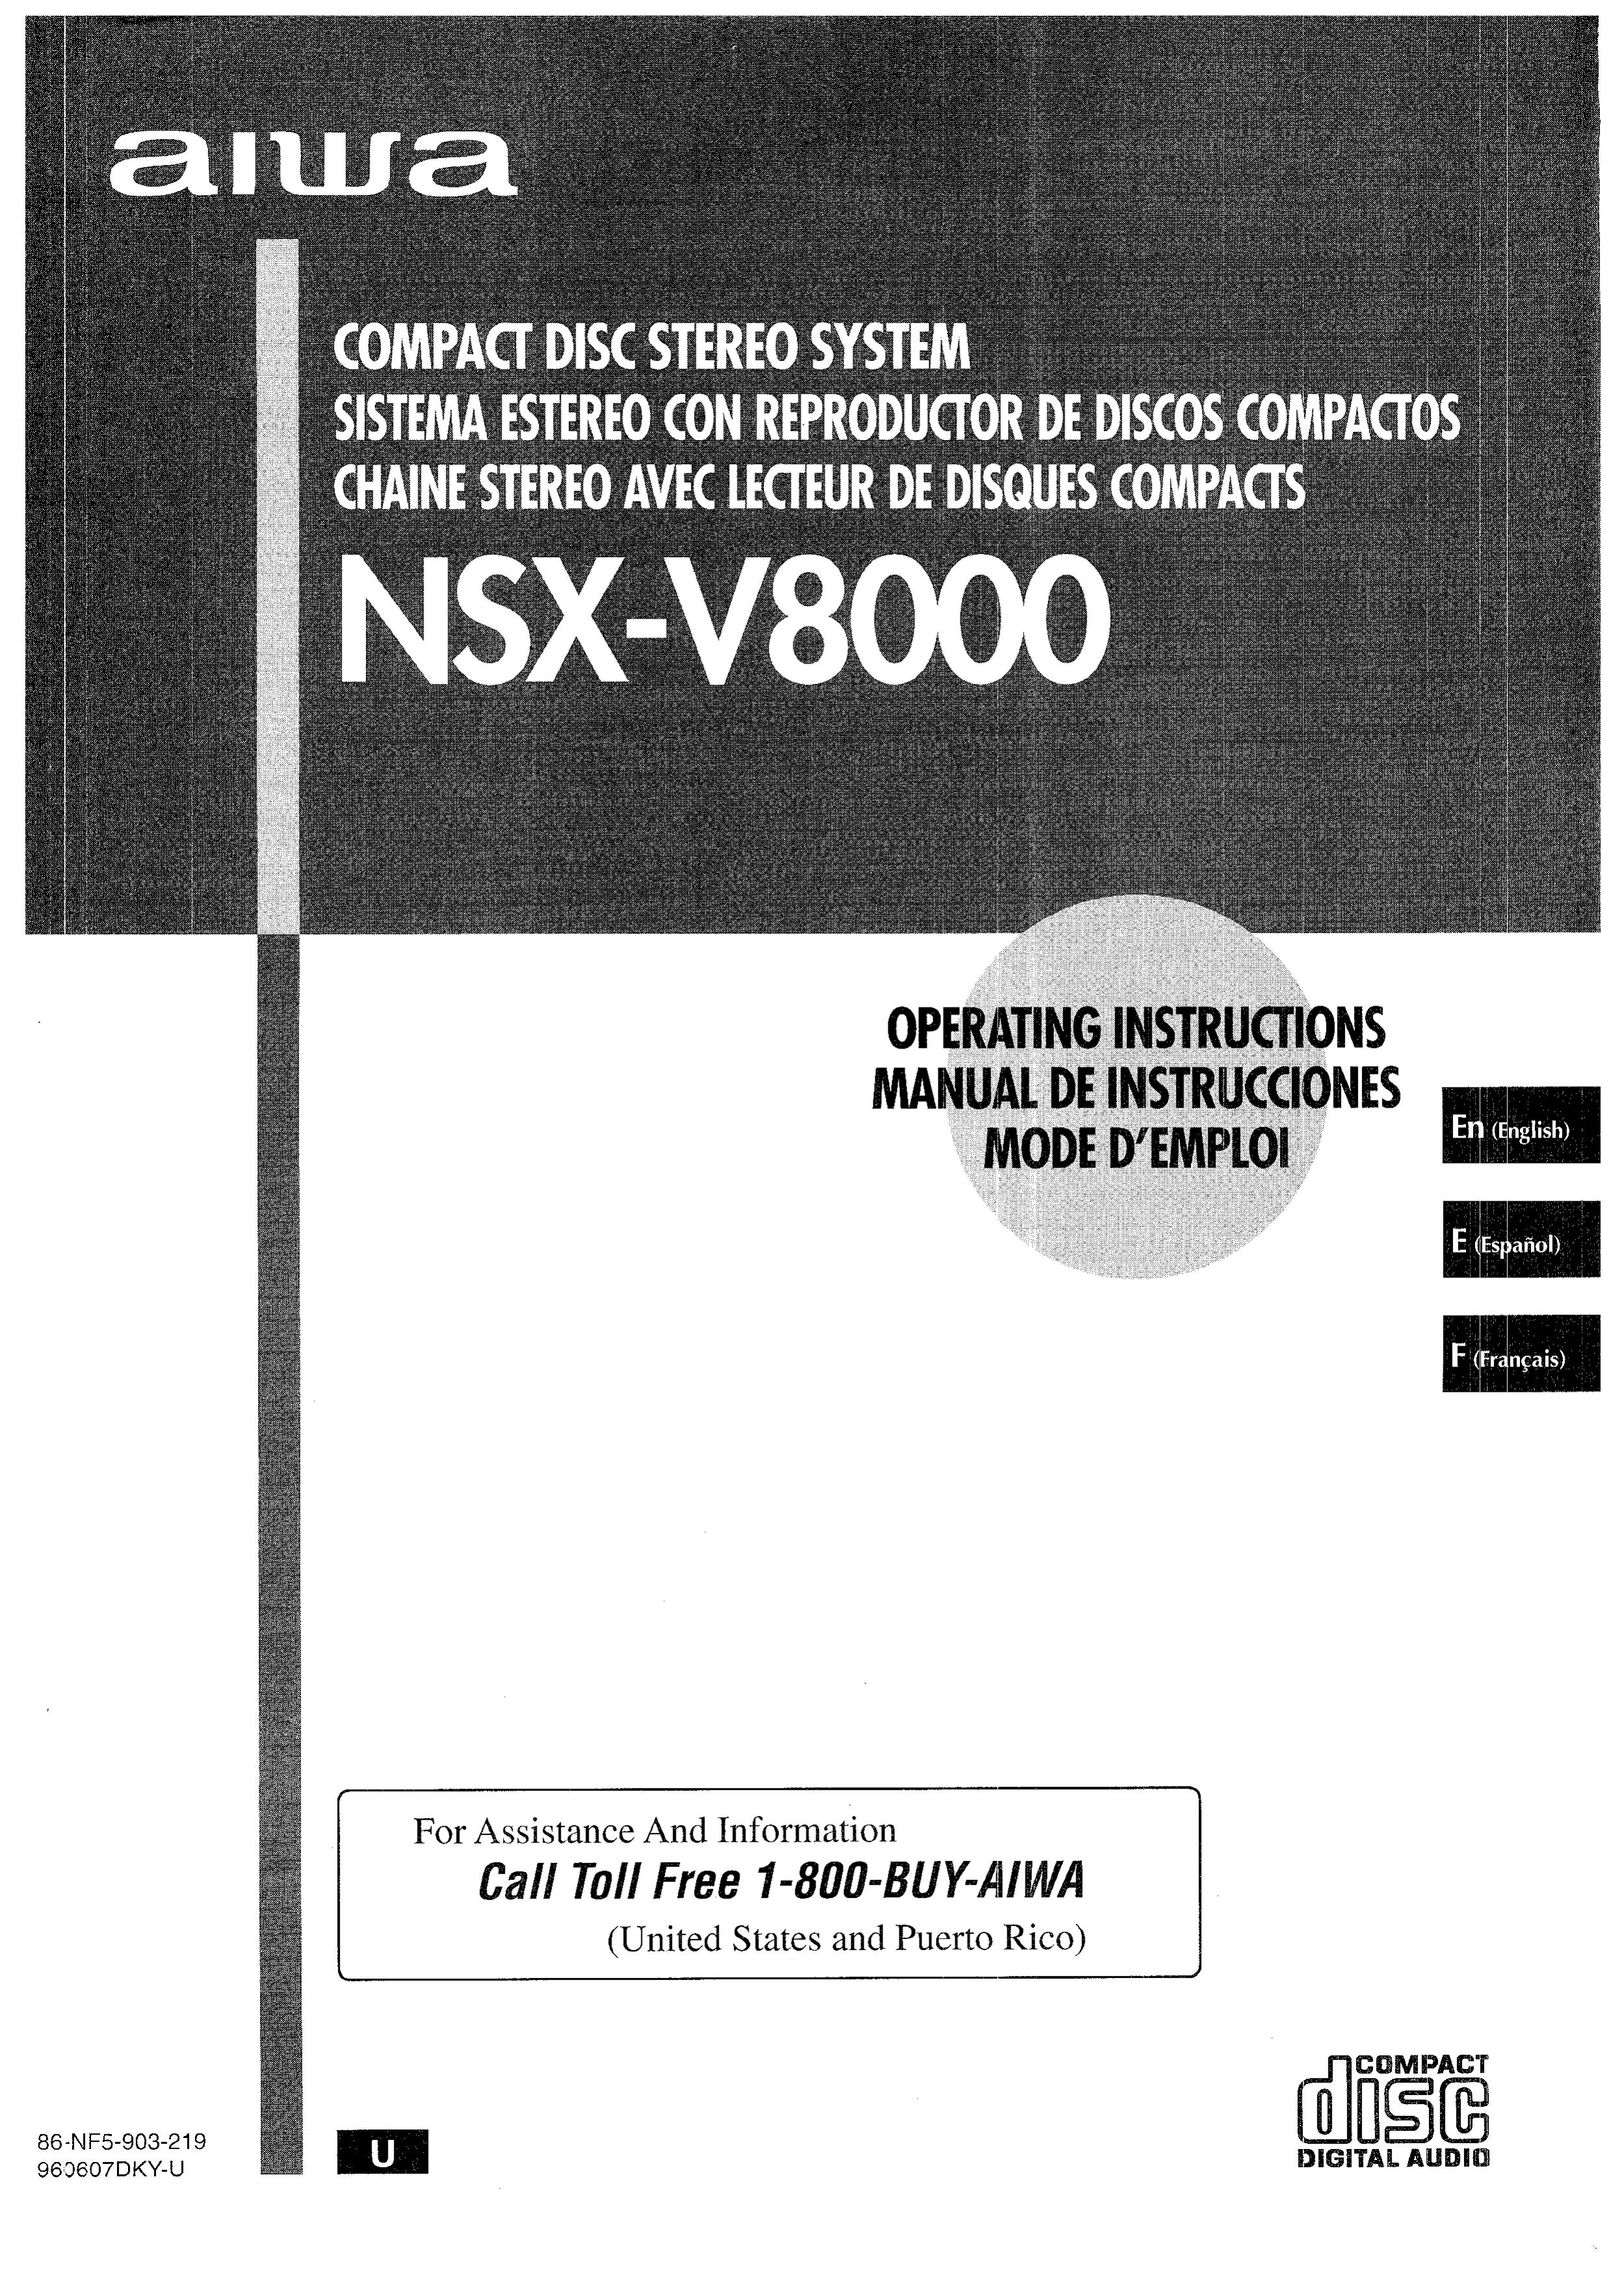 Aiwa CX-NV8000 CD Player User Manual